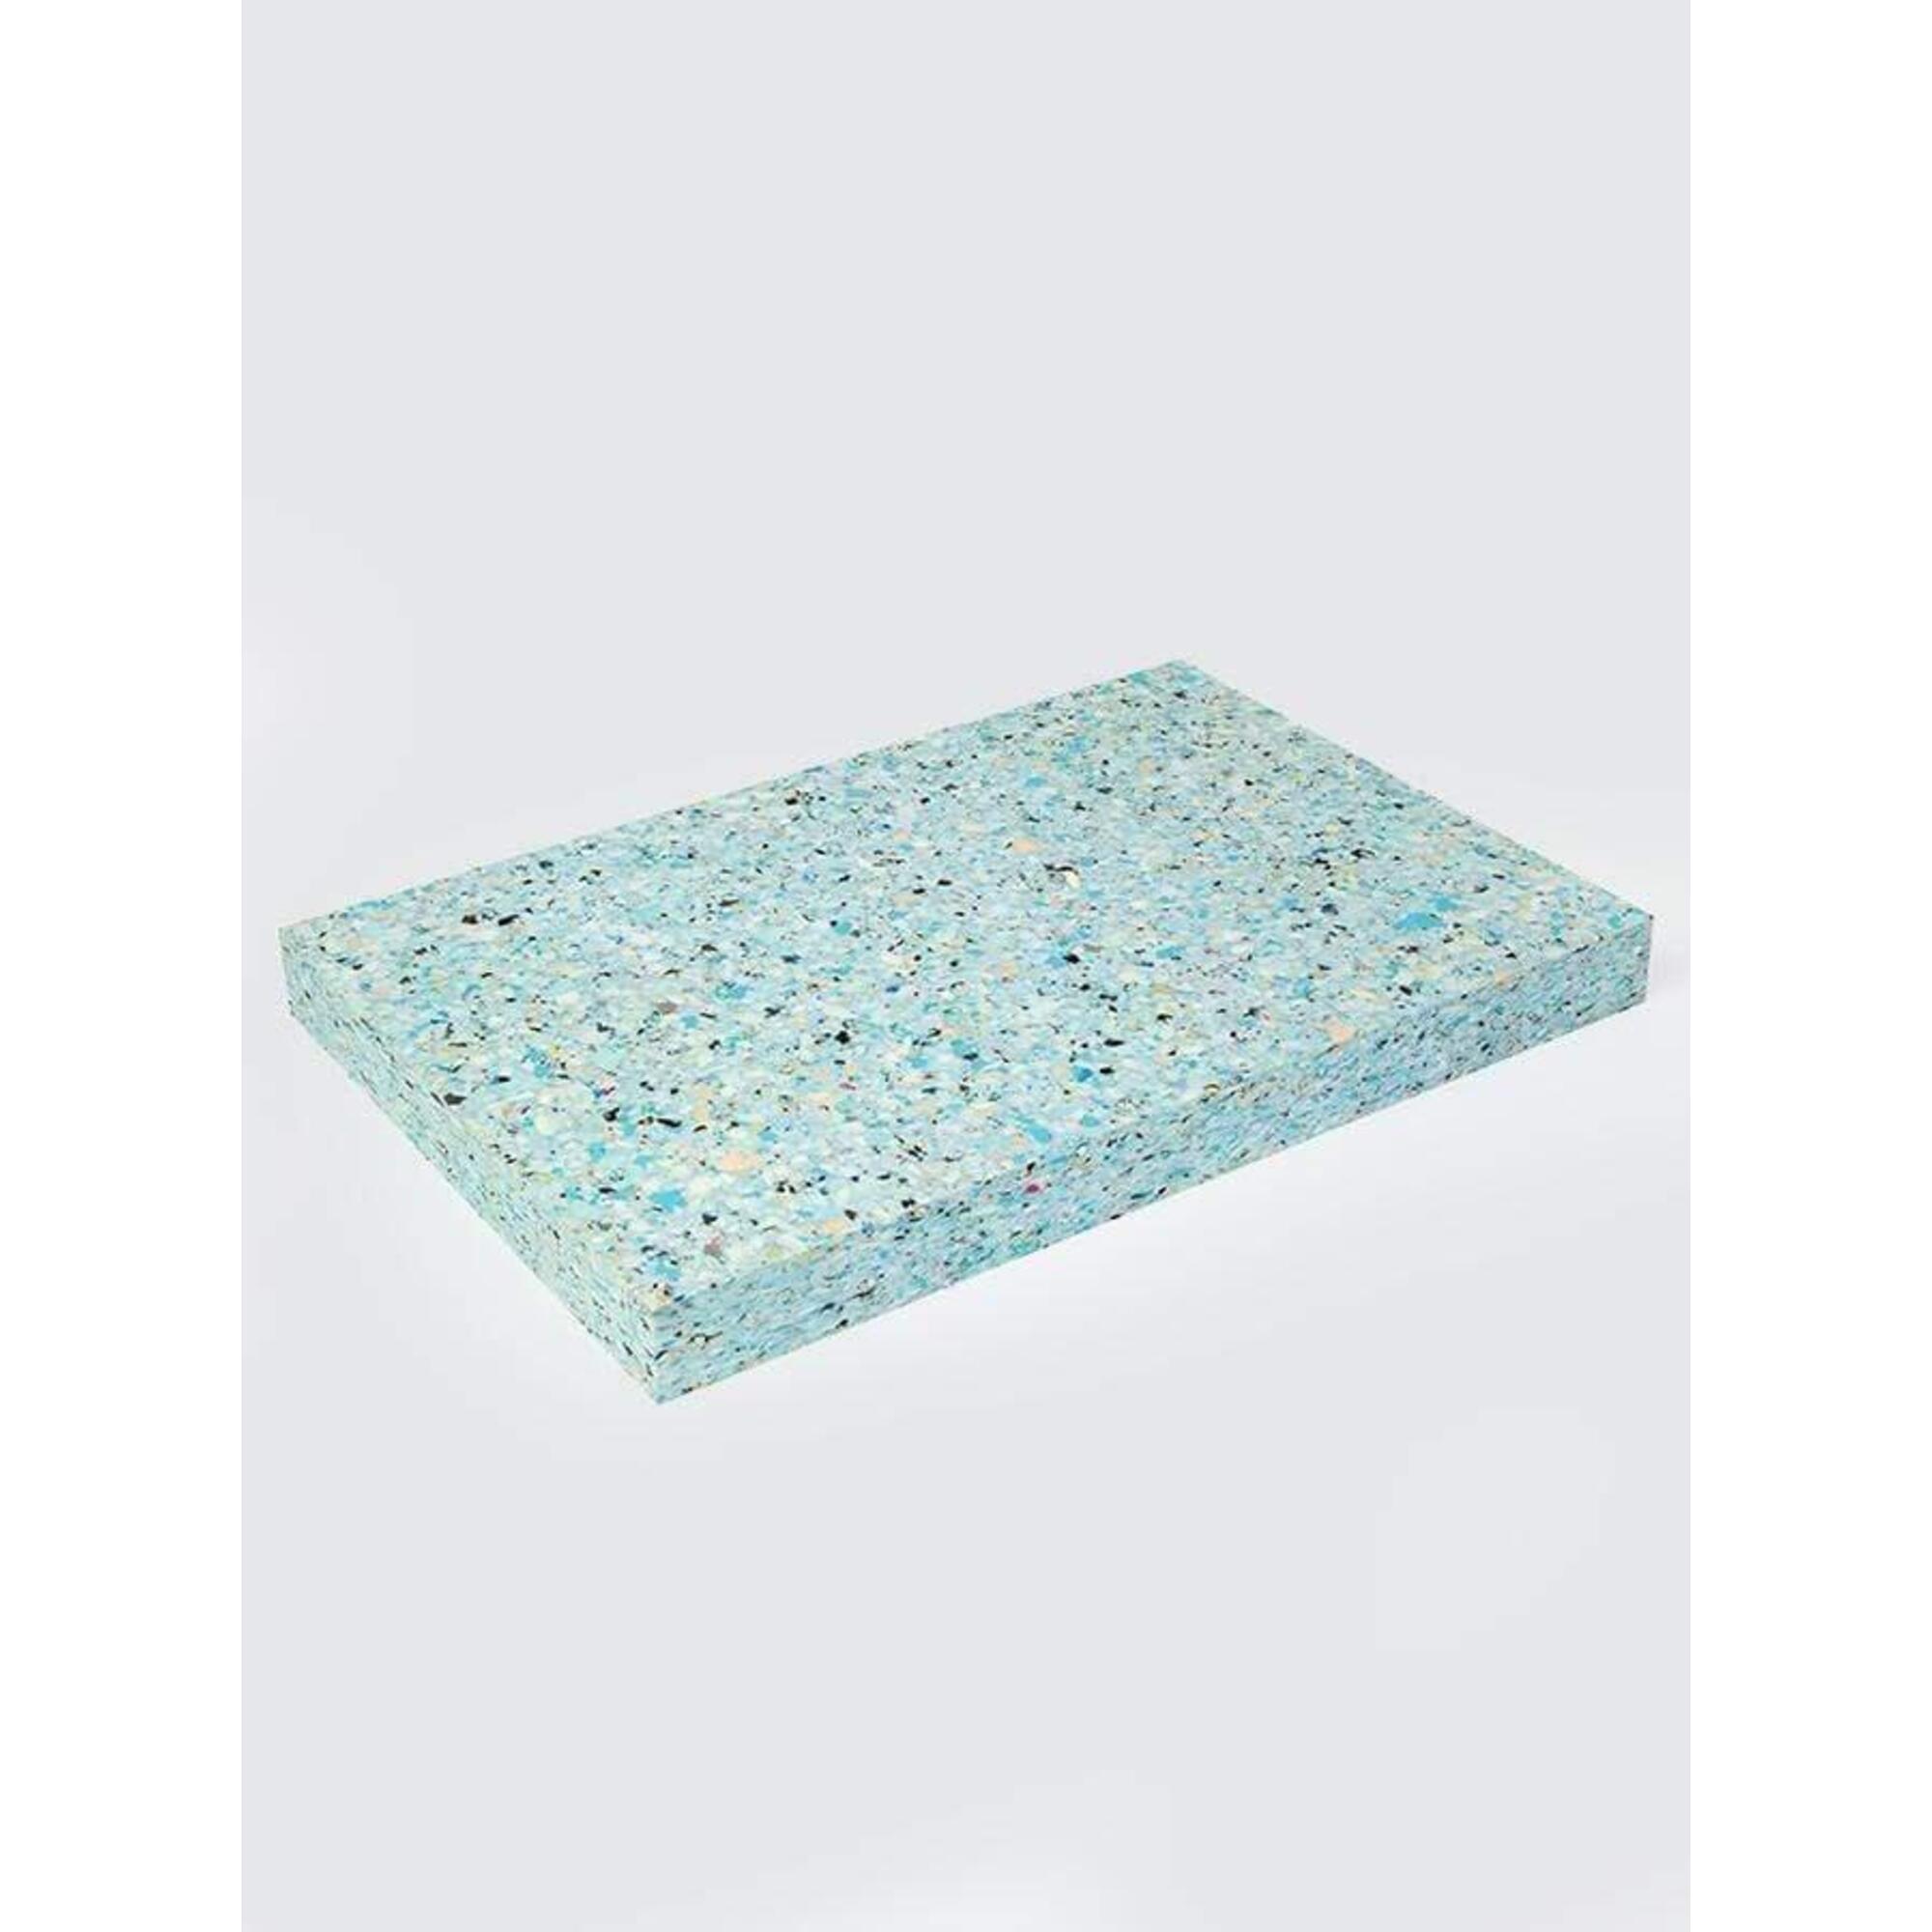 YOGA STUDIO Yoga Studio Recycled Chip Foam Extra Large Pad Block